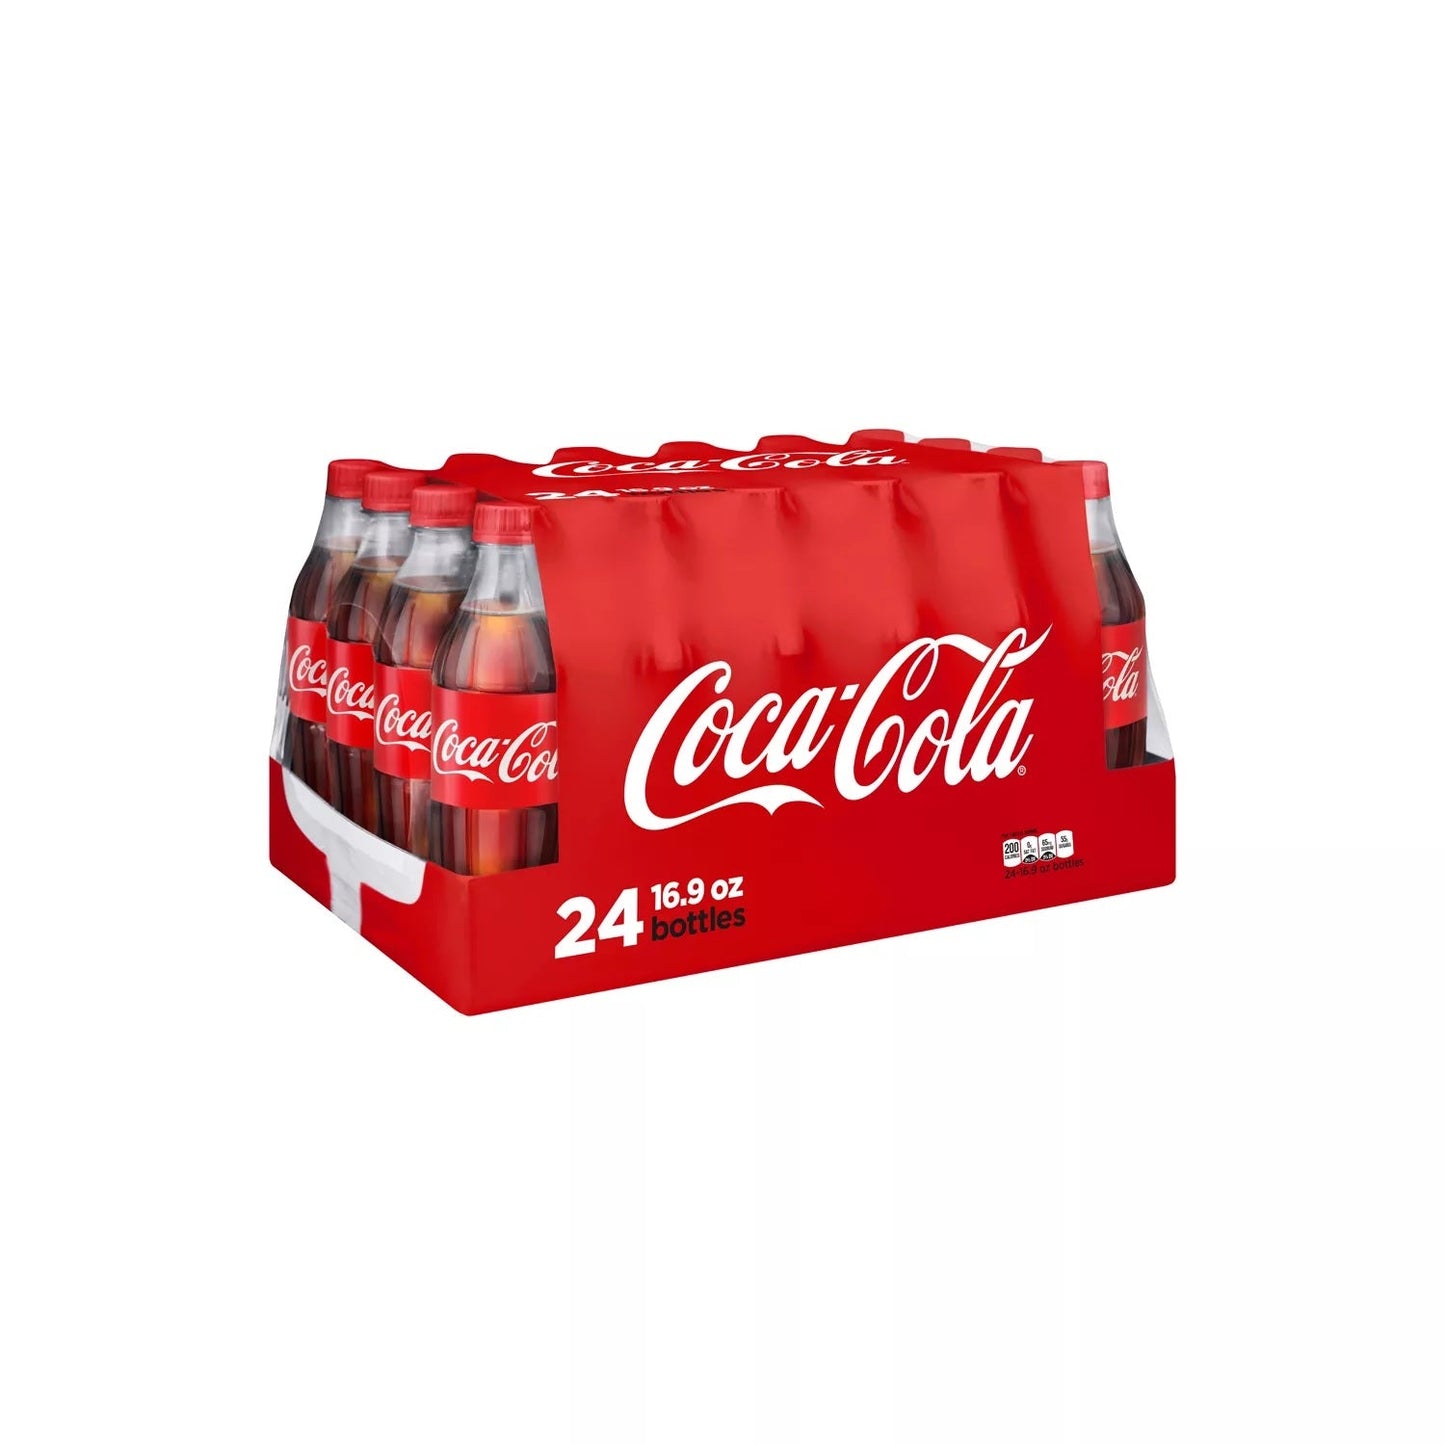 Coca-Cola Bottles - 16.9oz/24pk